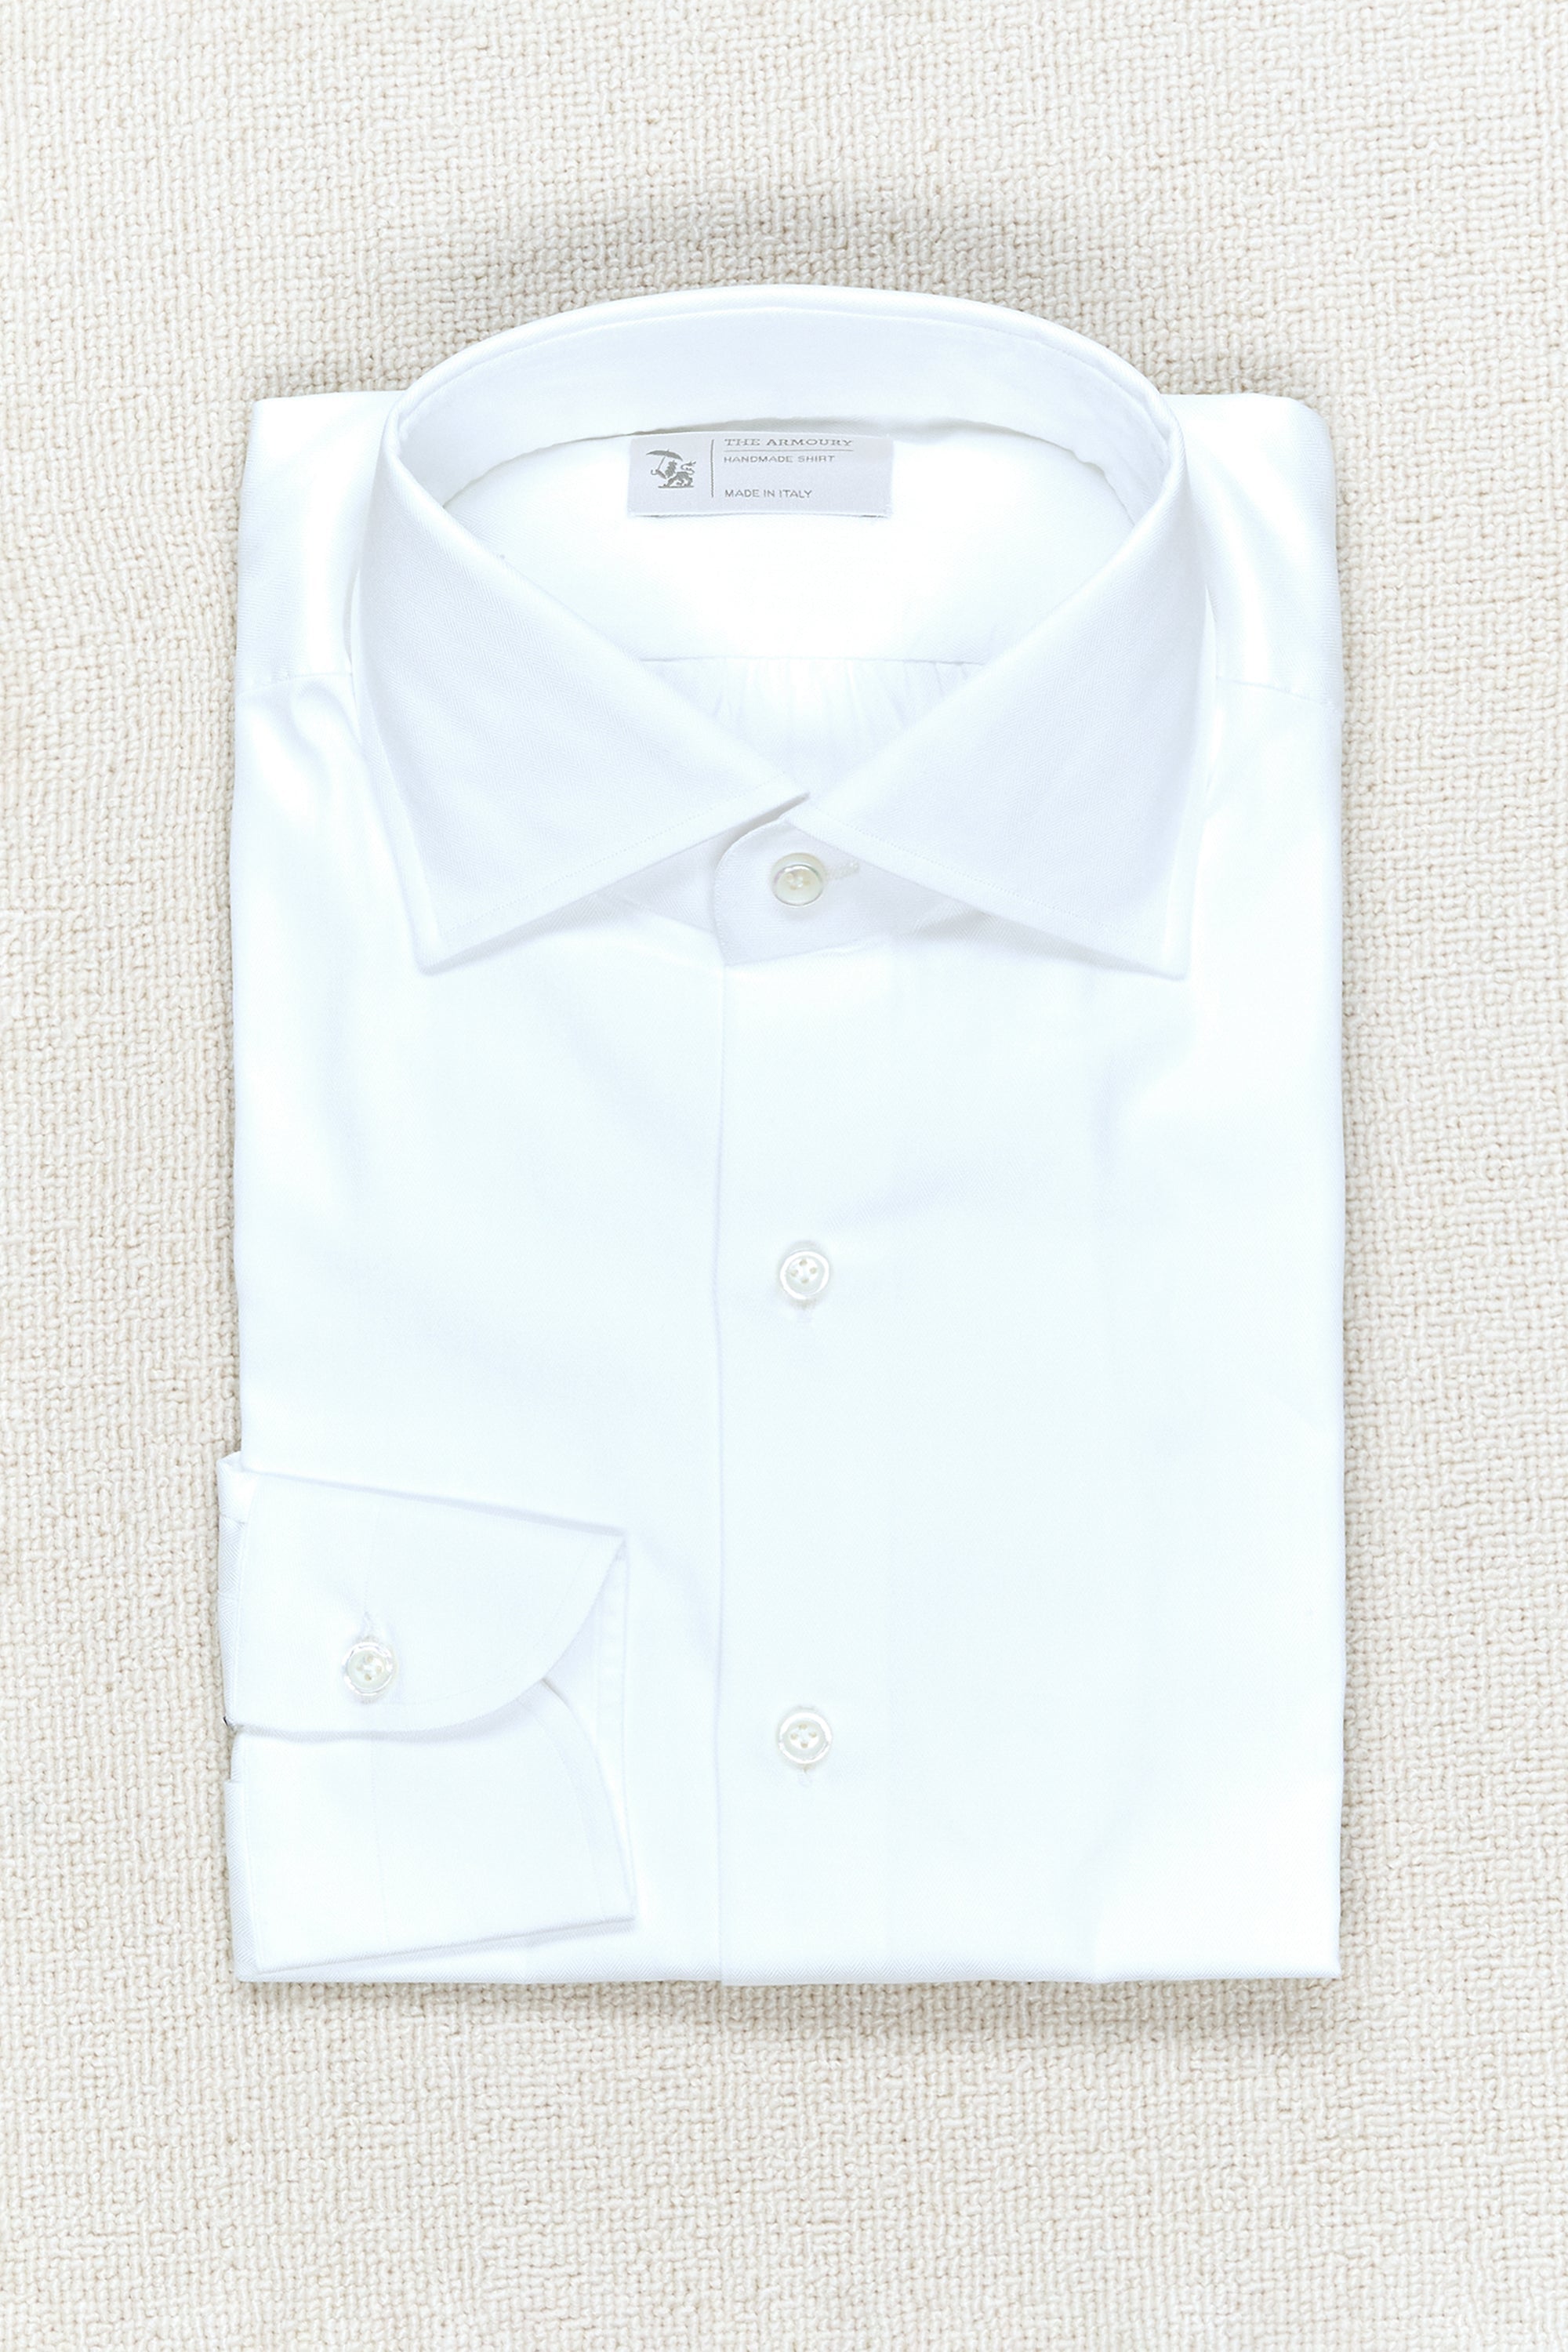 The Armoury White Cotton Herringbone Spread Collar Shirt